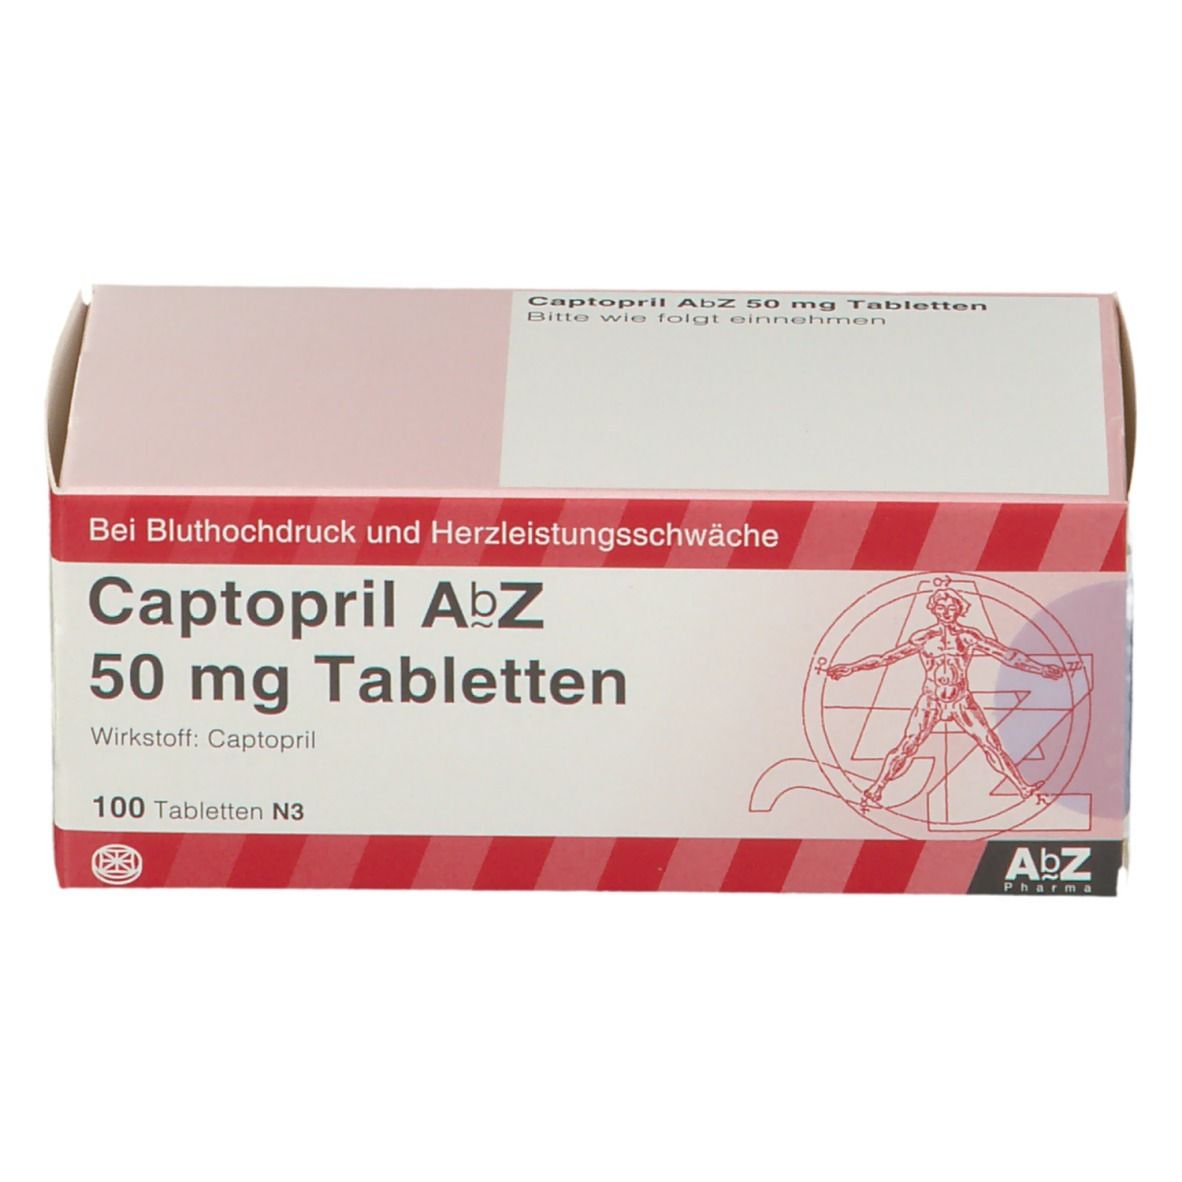 Captopril AbZ 50 mg